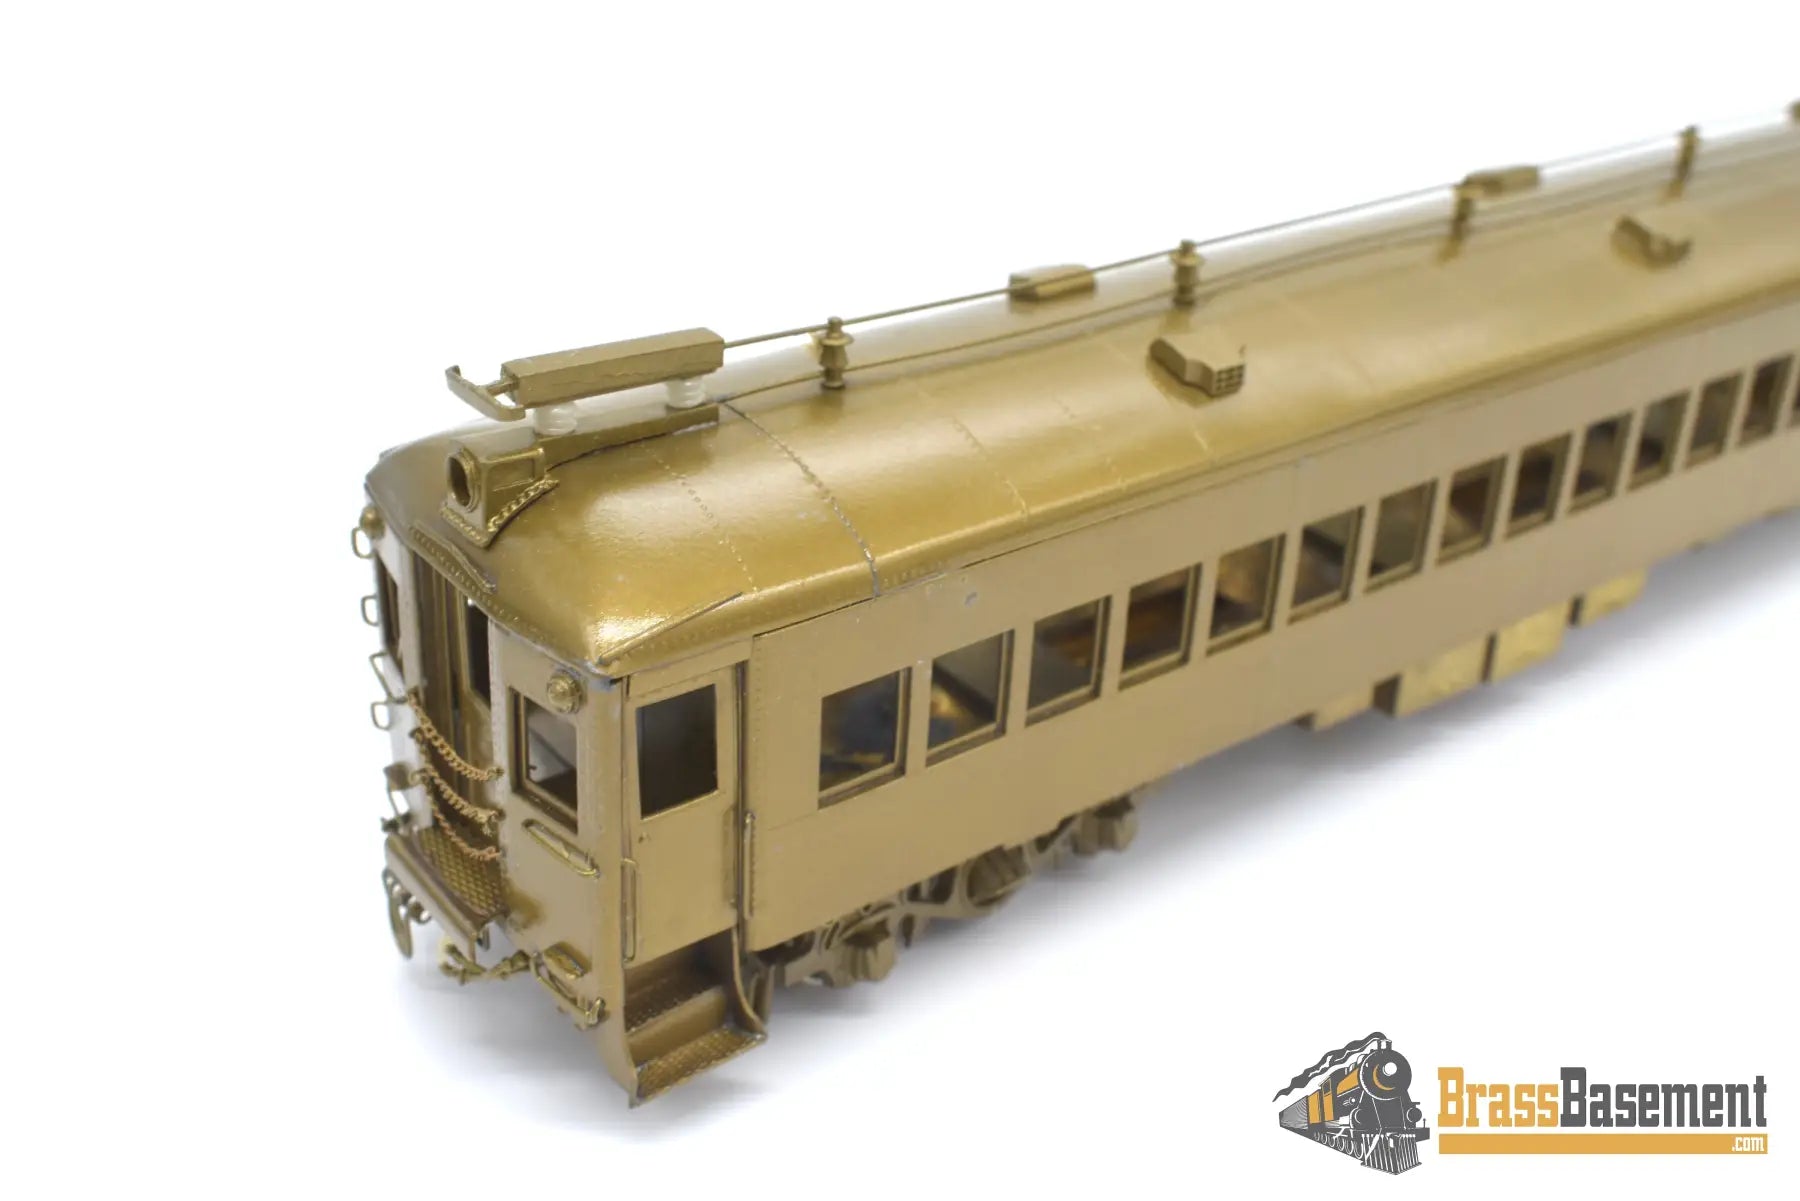 Ho Brass - Njcb Reading Railroad Self Propelled Mu 3 - Car Set Unpainted Passenger